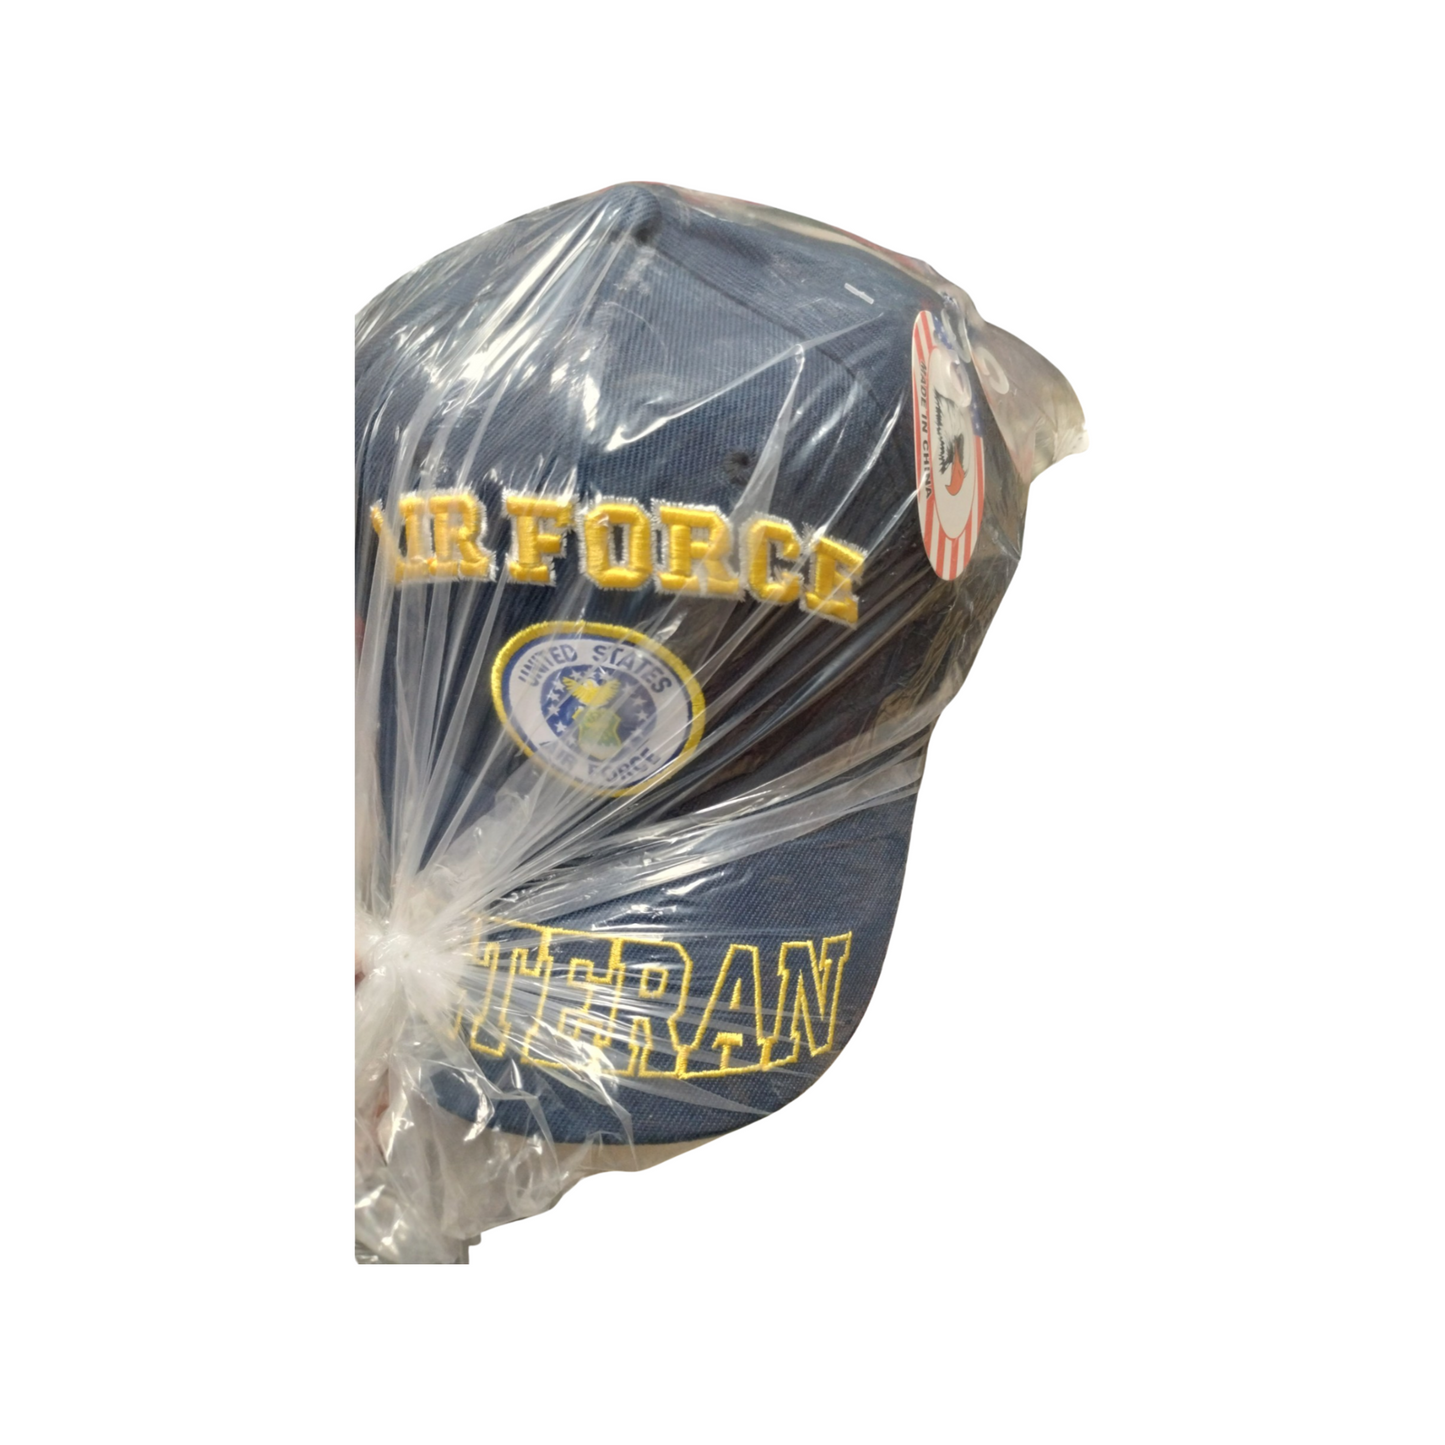 "Airforce Veteran Baseball Caps - Assorted Color Options - Patriotic Headwear"